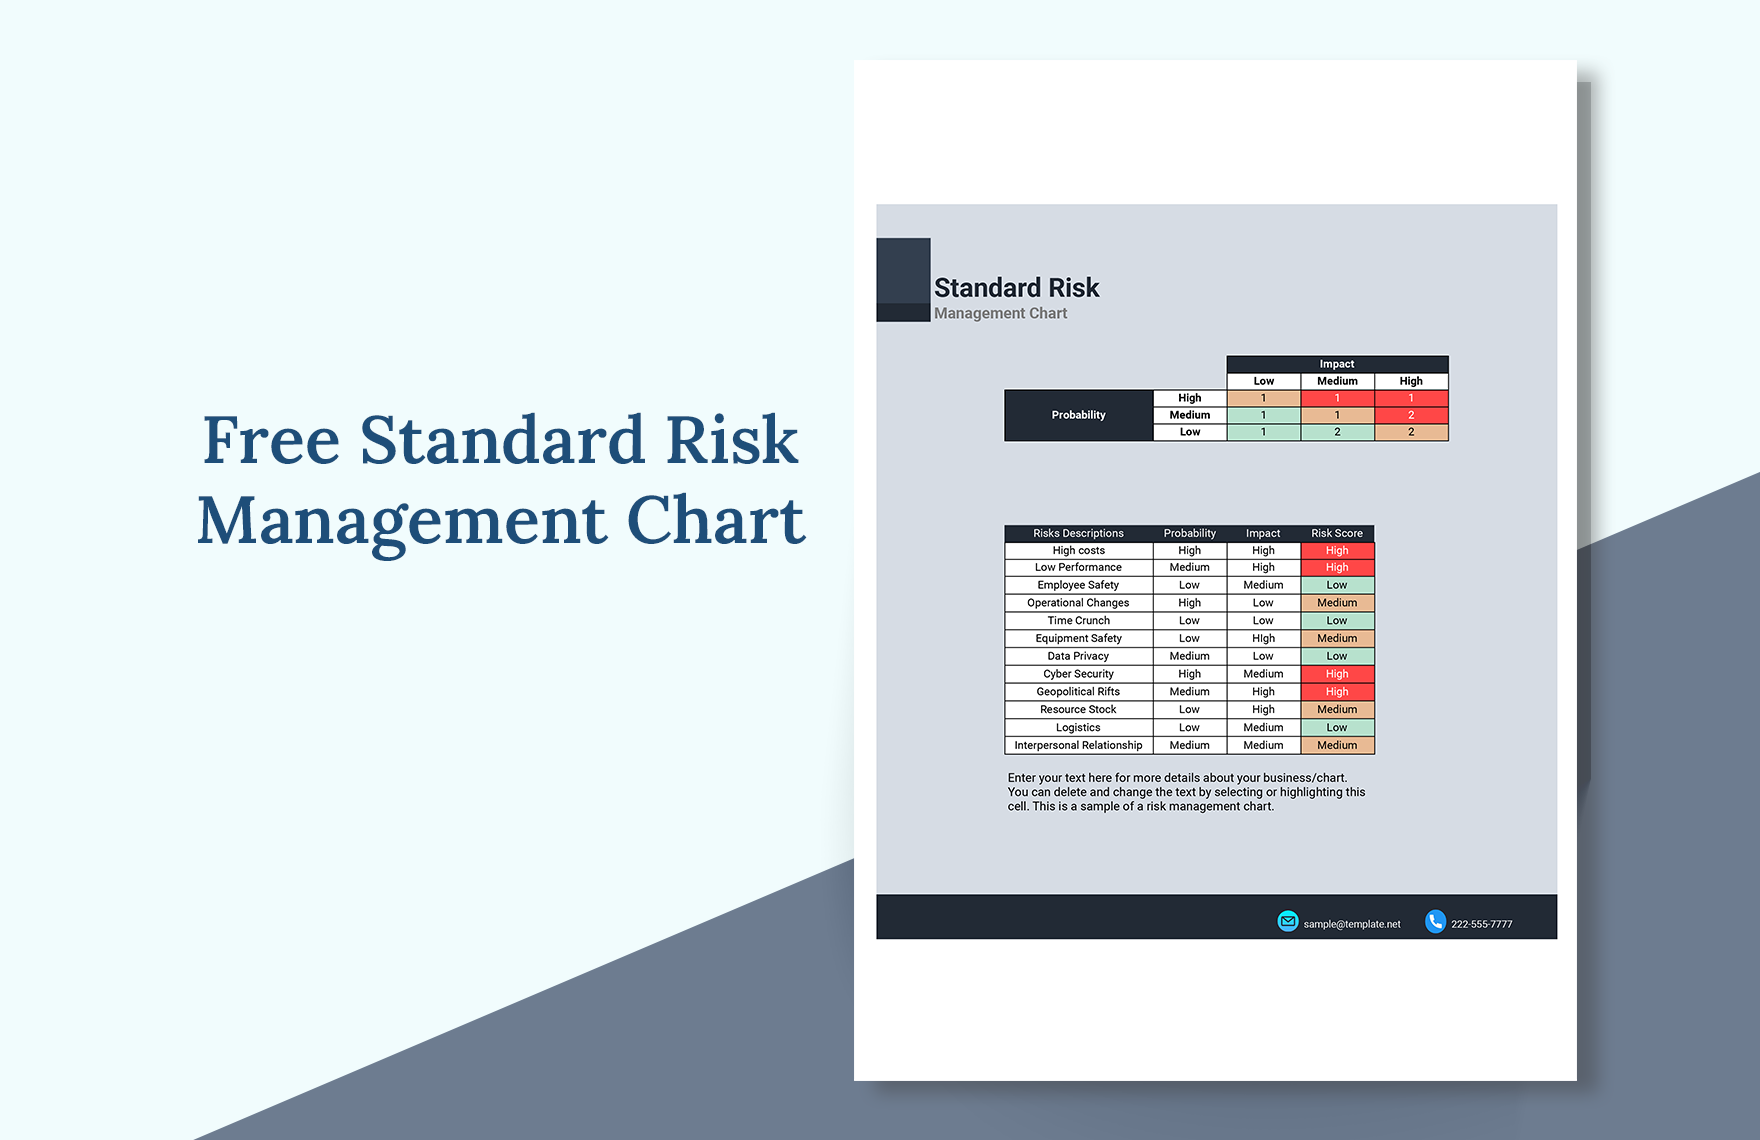 Free Standard Risk Management Chart